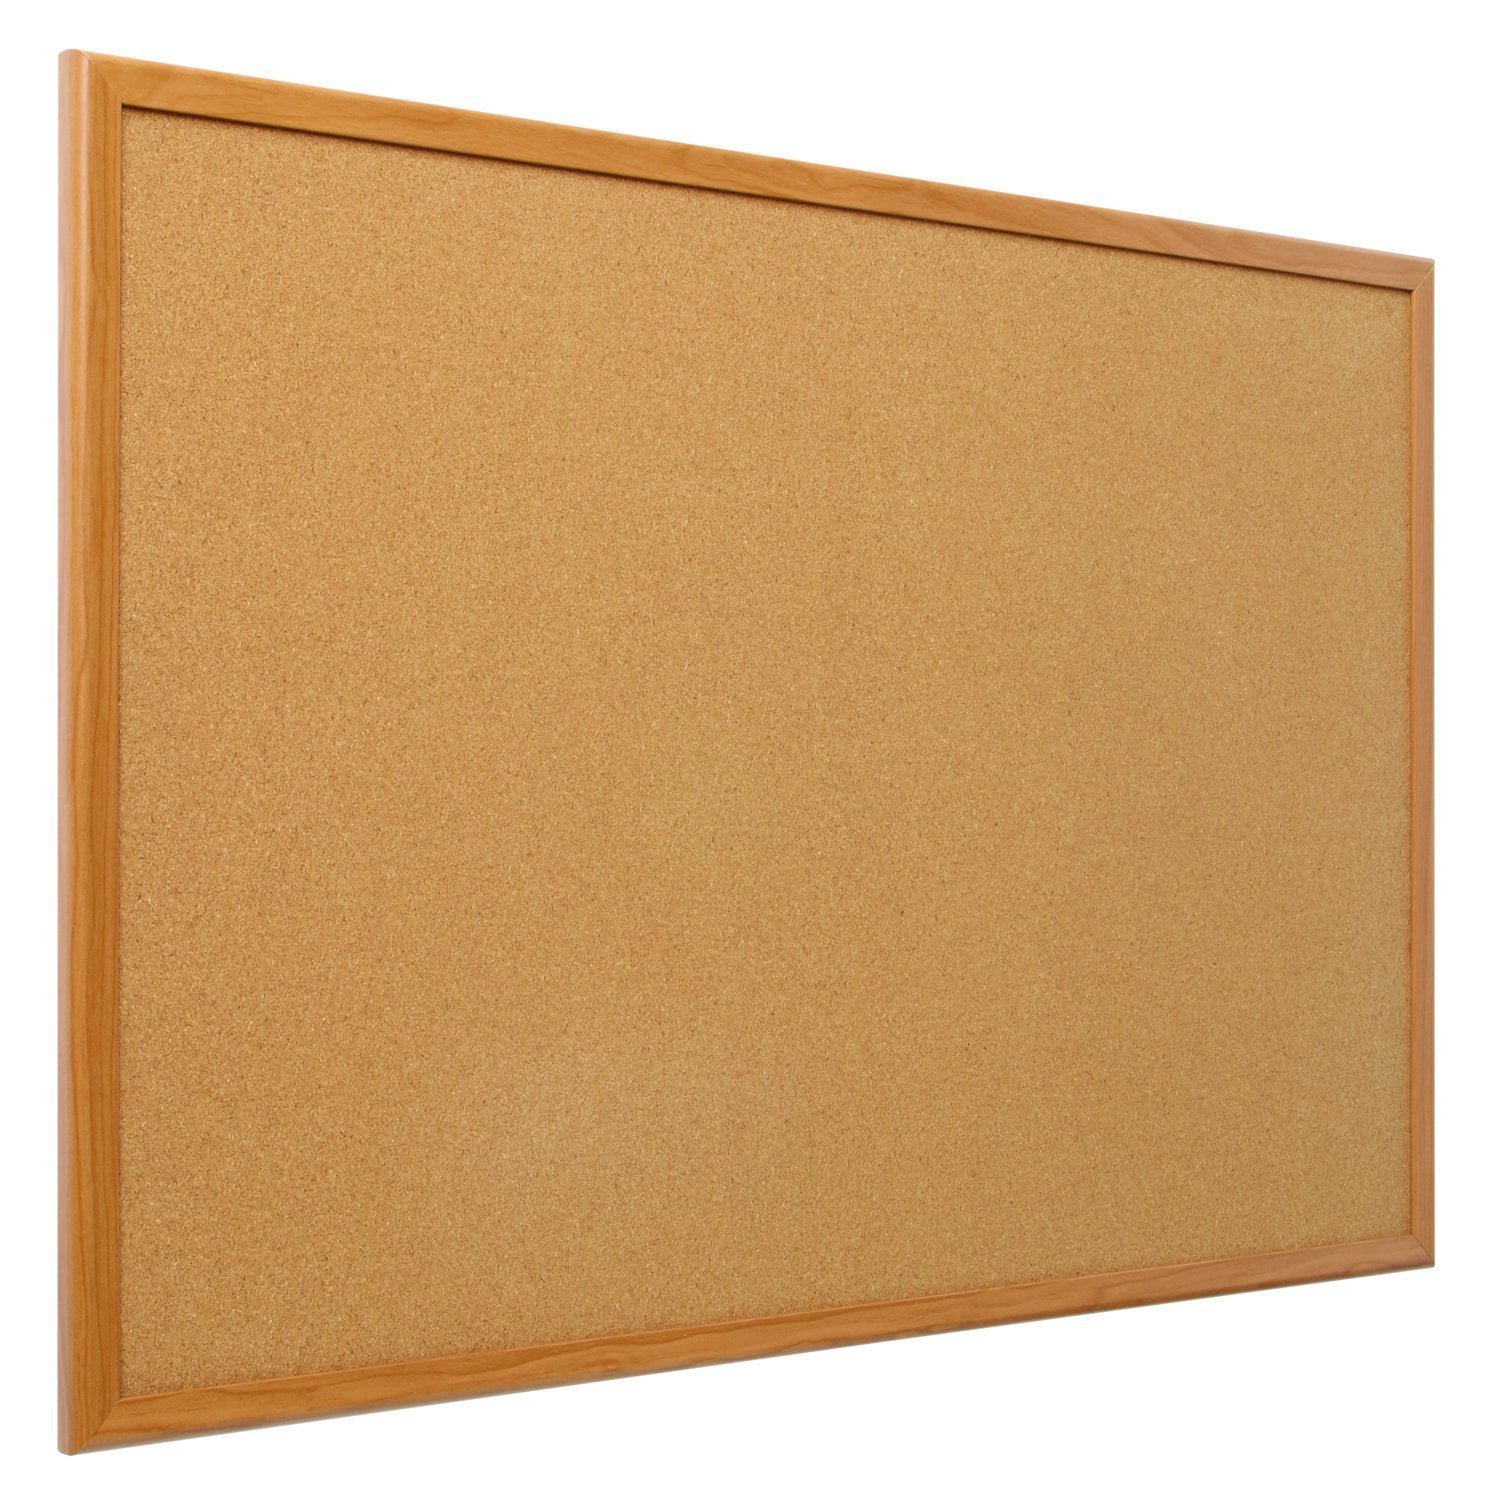 Quartet Corkboard Framed Bulletin Board 2' x 3' Cork Board Oak Wood MWDB2436-ECR 